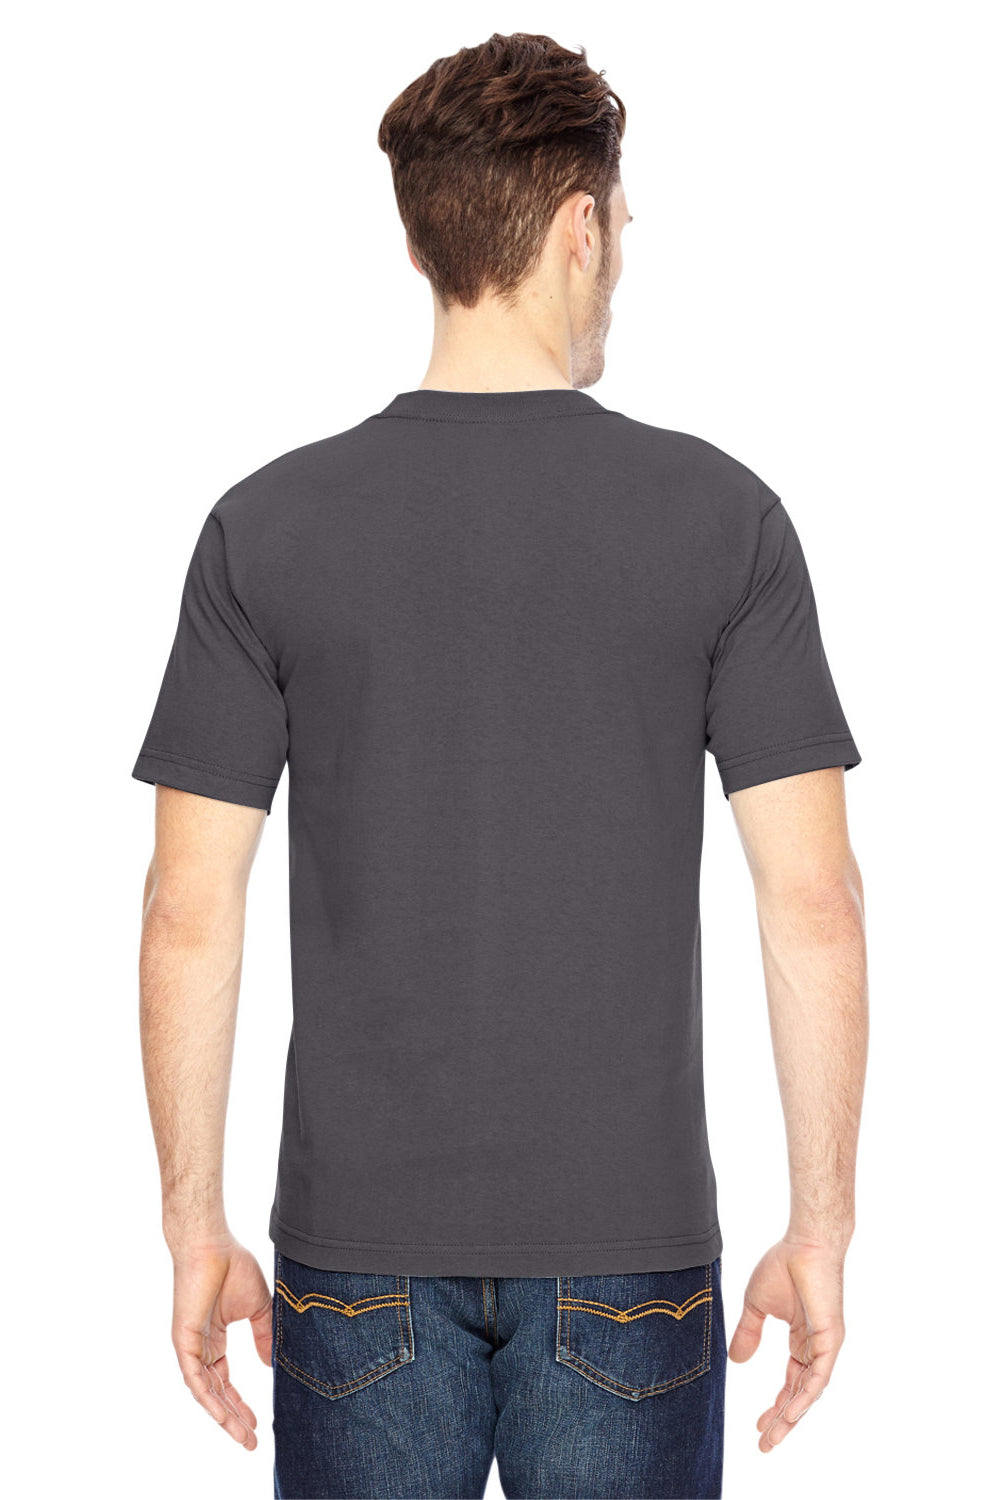 Bayside BA5100 Mens USA Made Short Sleeve Crewneck T-Shirt Charcoal Grey Model Back